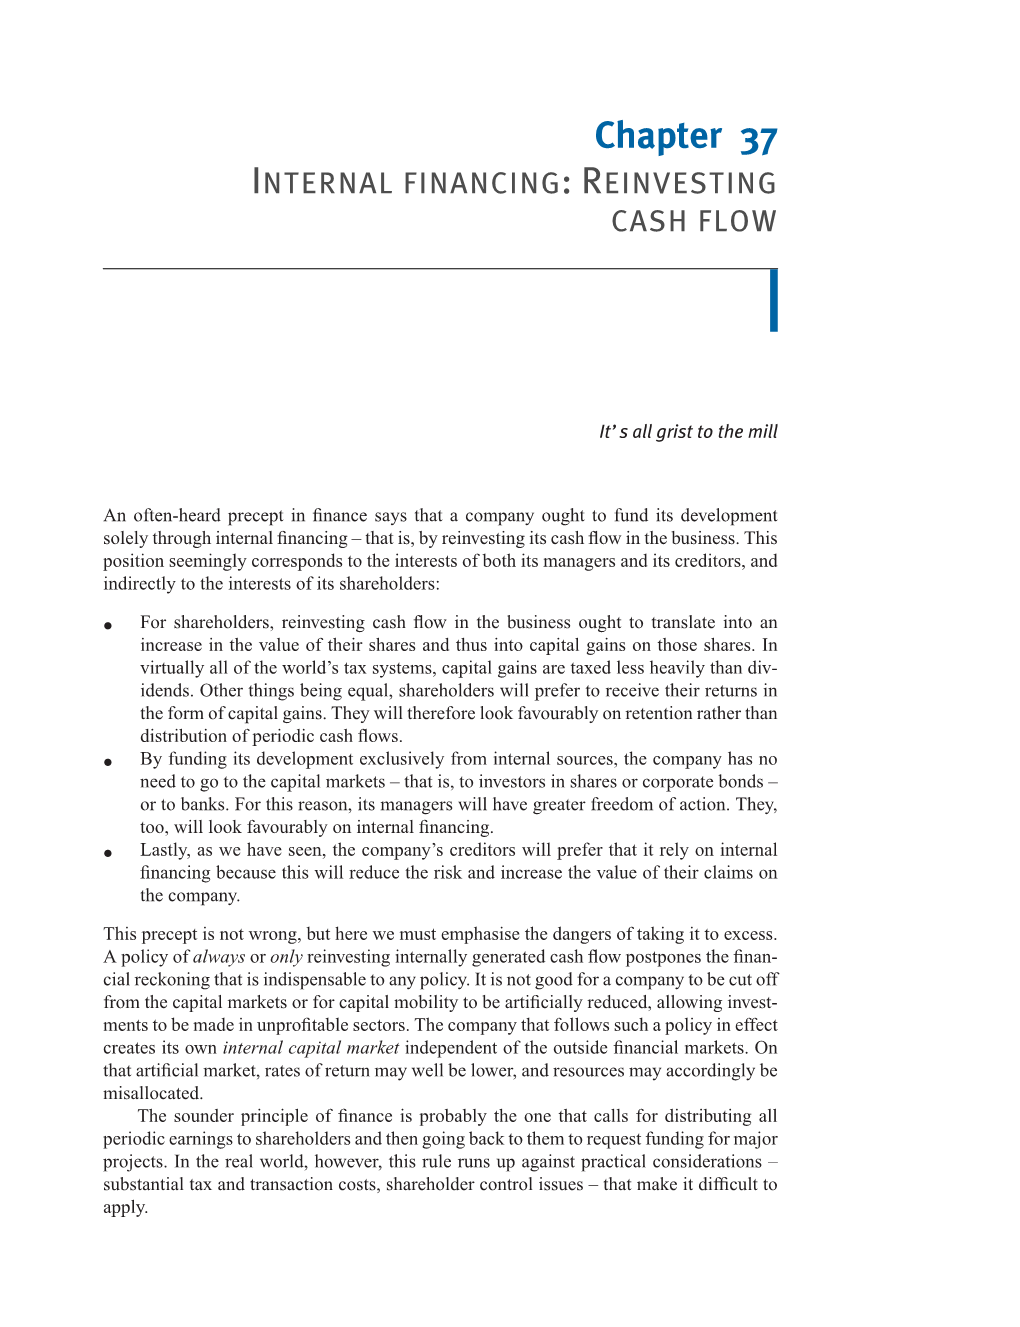 Chapter 37 INTERNAL FINANCING:REINVESTING CASH FLOW